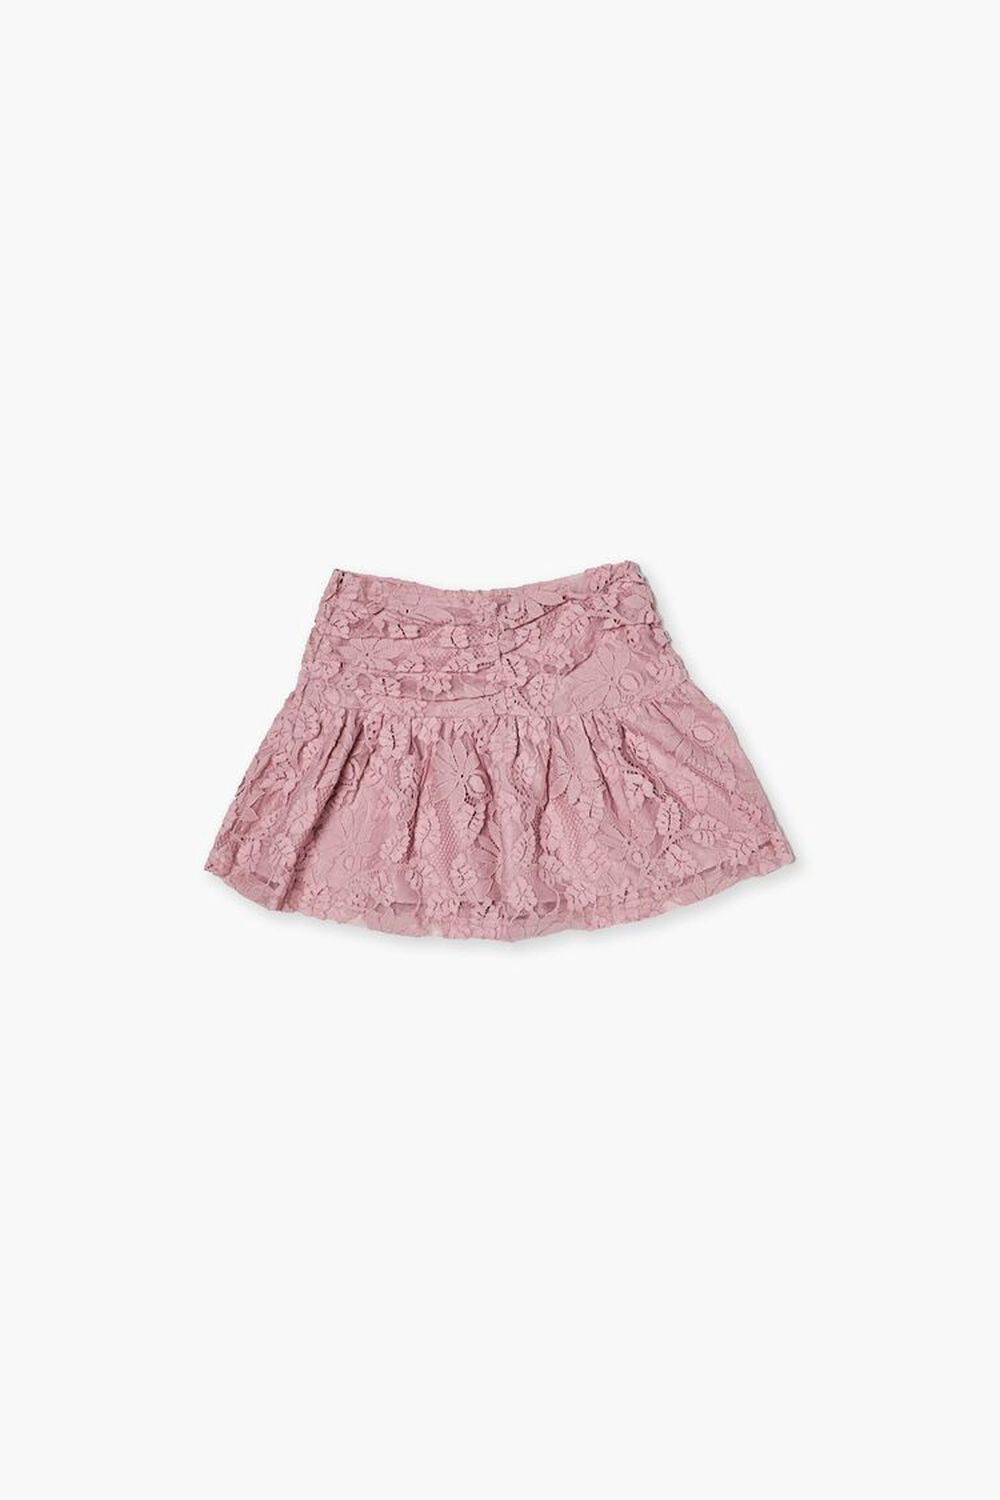 MAUVE Girls Lace Drop-Waist Skirt (Kids), image 2